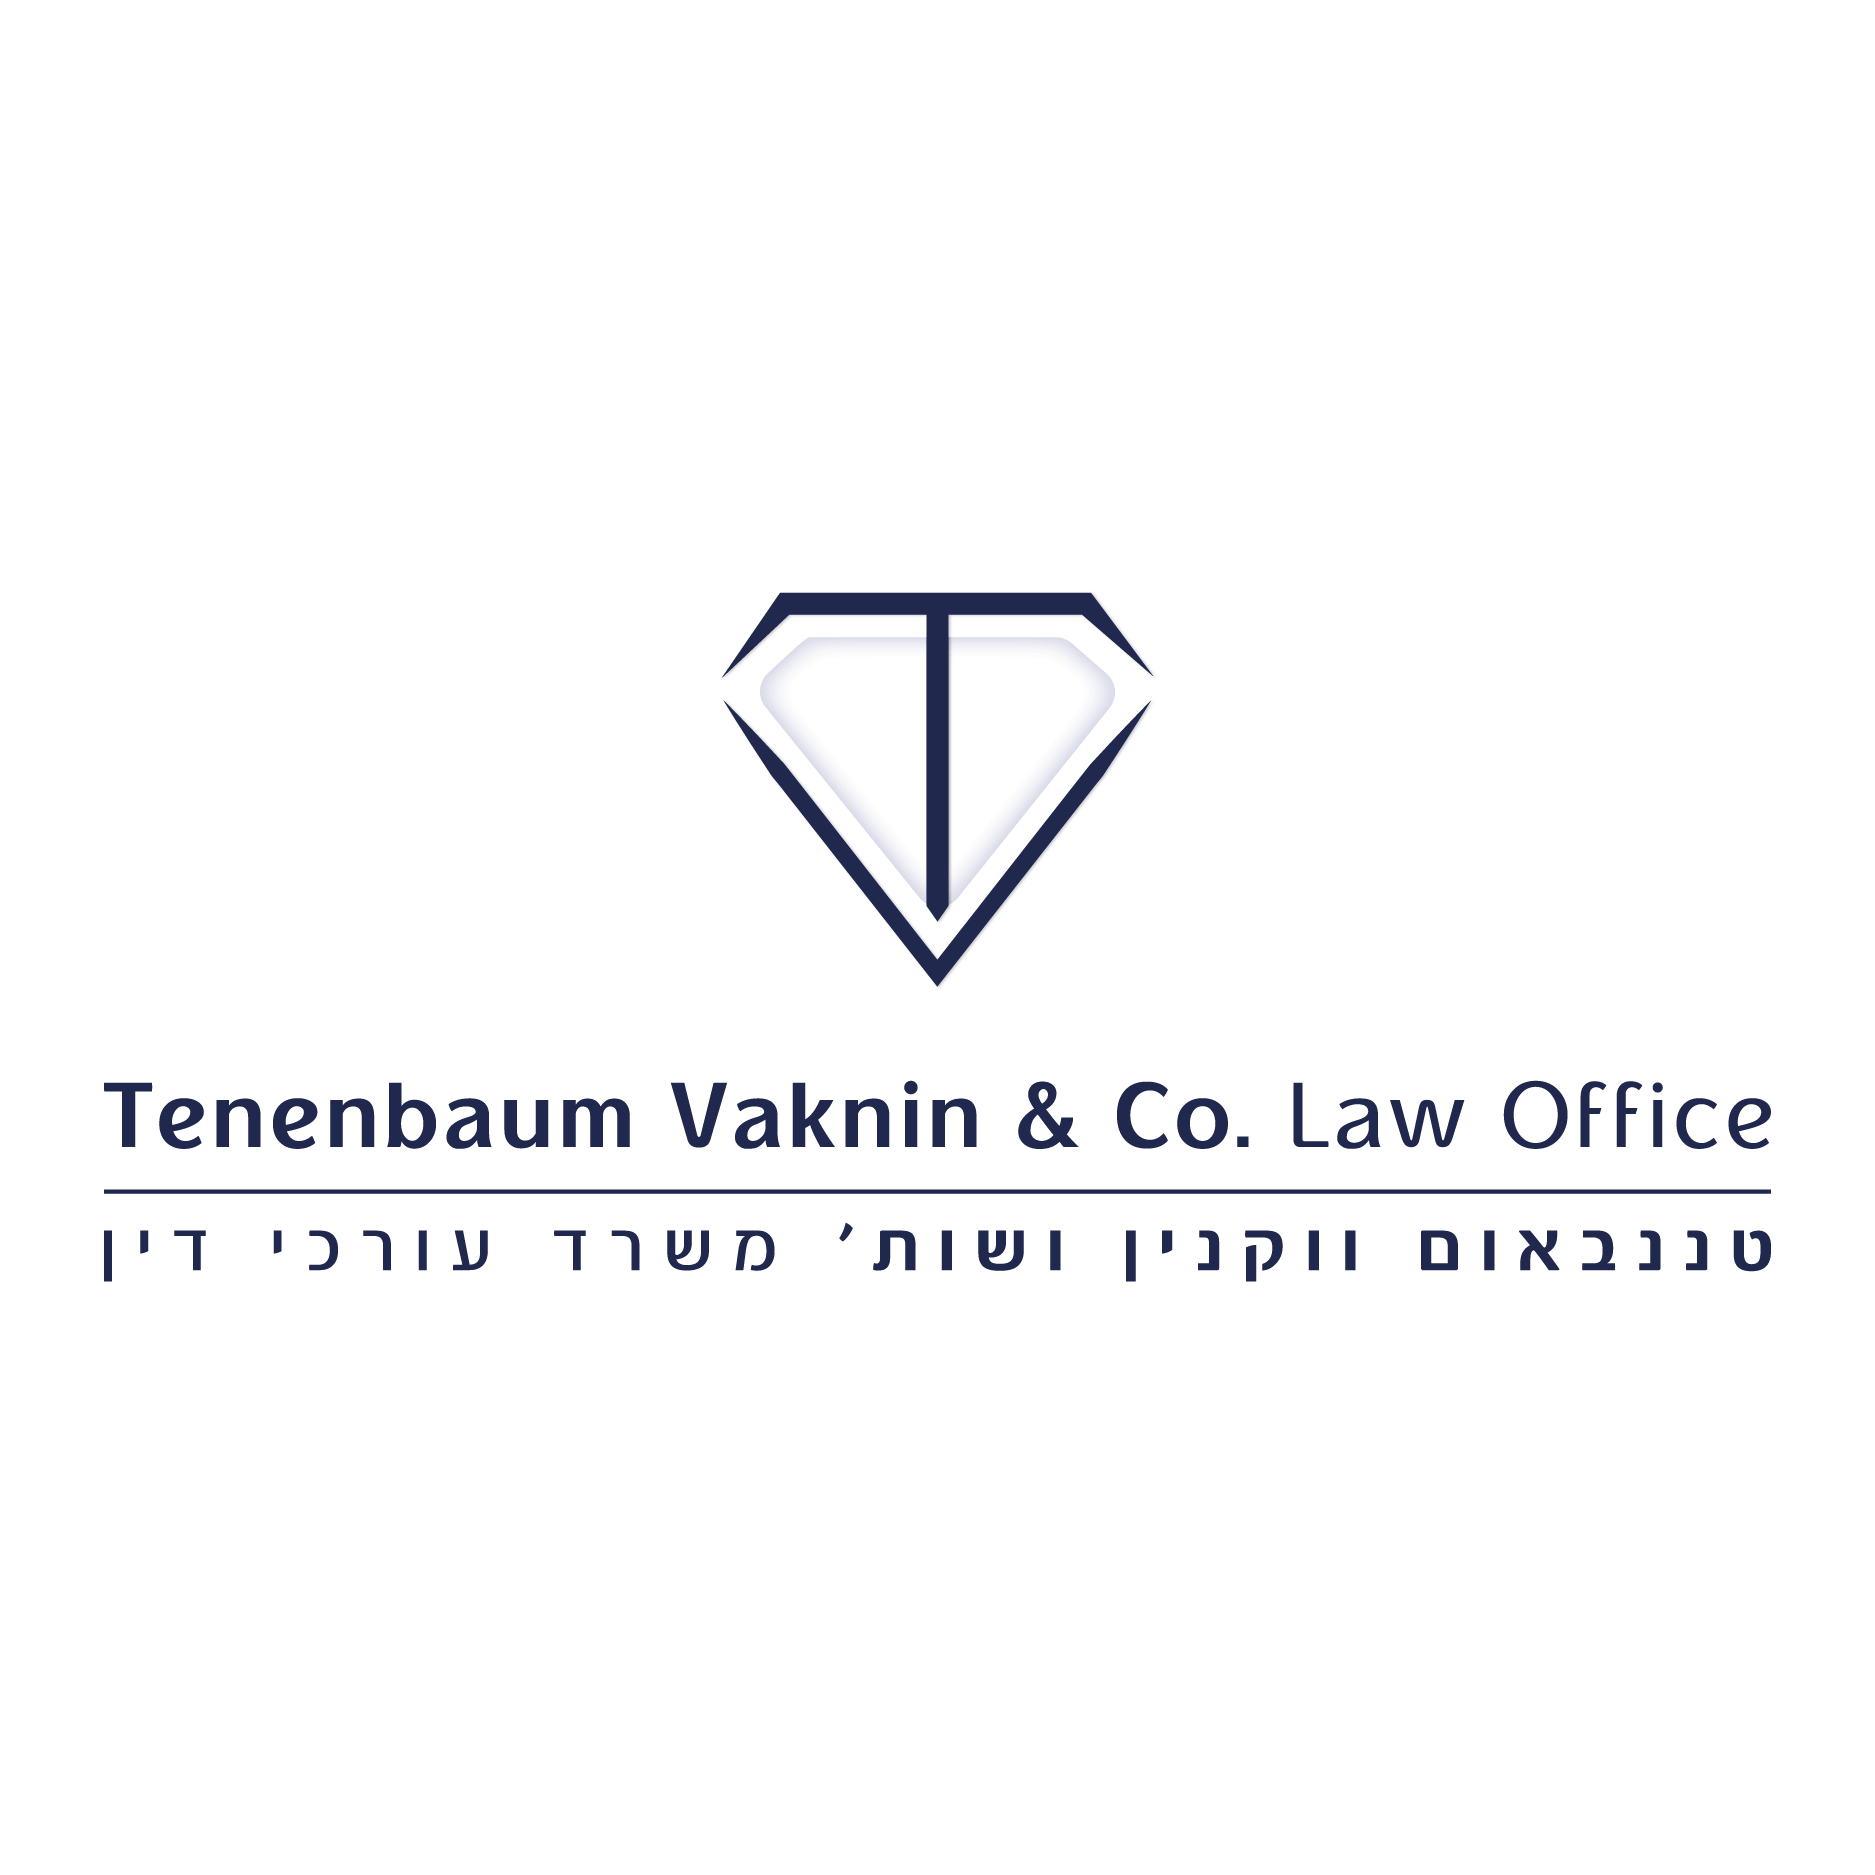 Winner Image - Tenenbaum Vaknin & Co. Law Firm